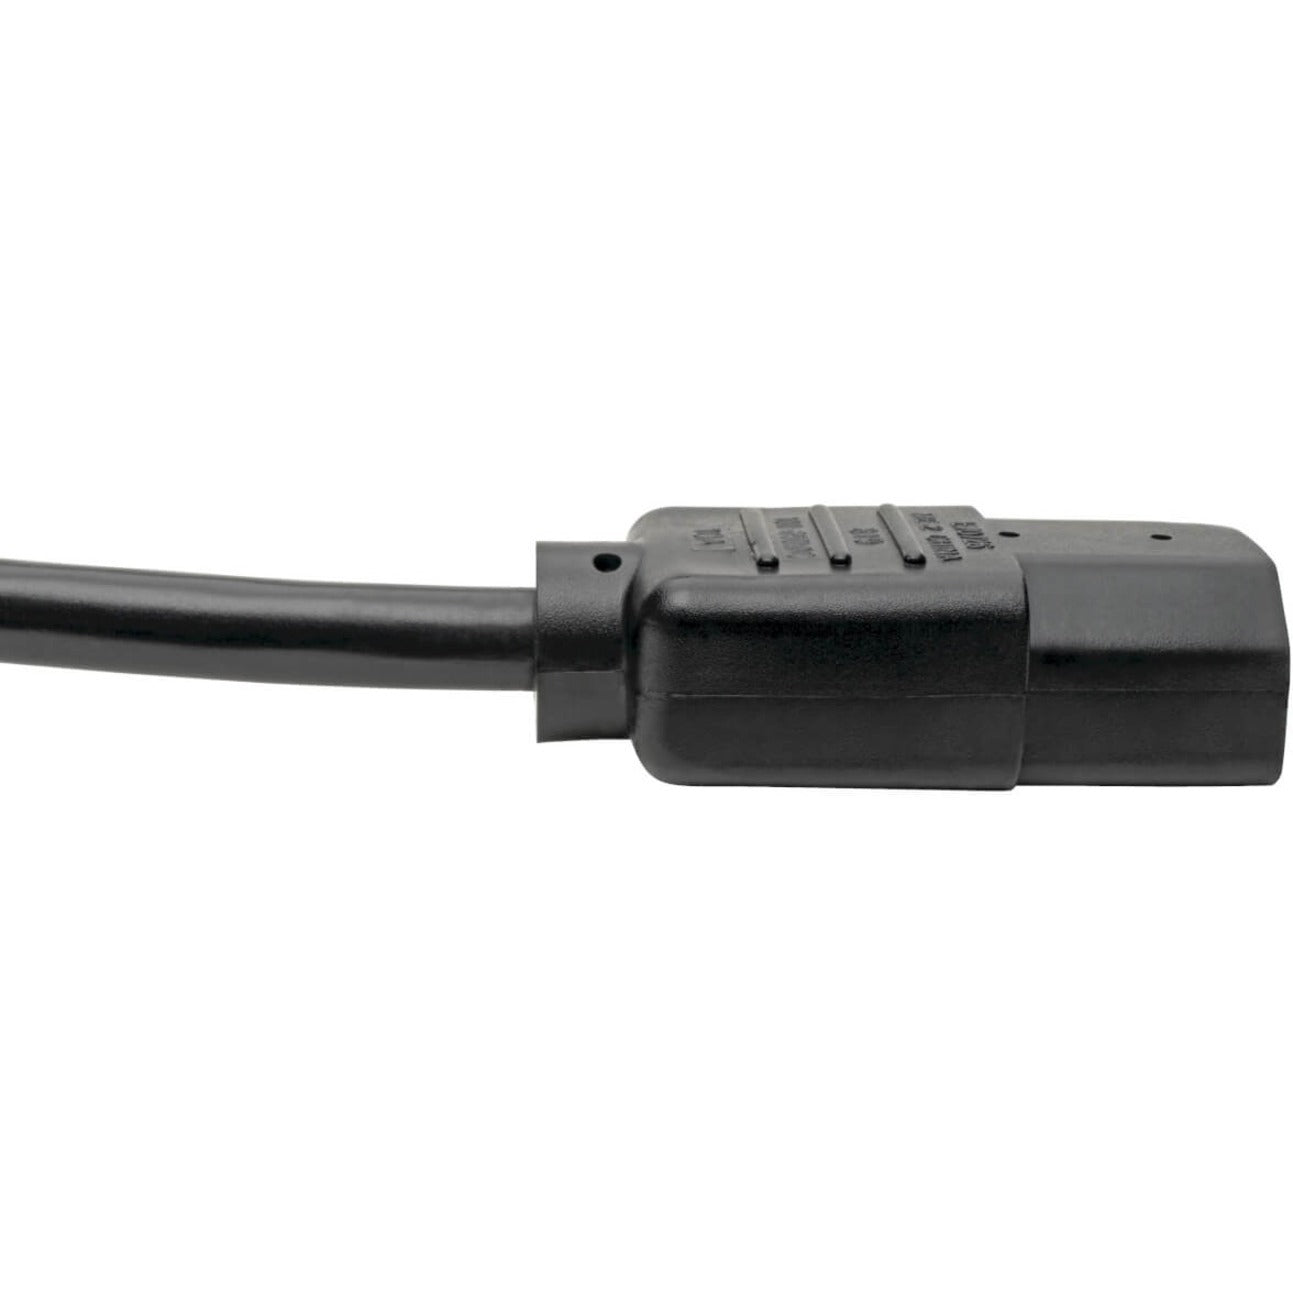 Tripp Lite P004-002-5 Standard Power Cord, 5-Pack, 2ft, IEC-320-C14 to IEC-320-C13 Power Cables